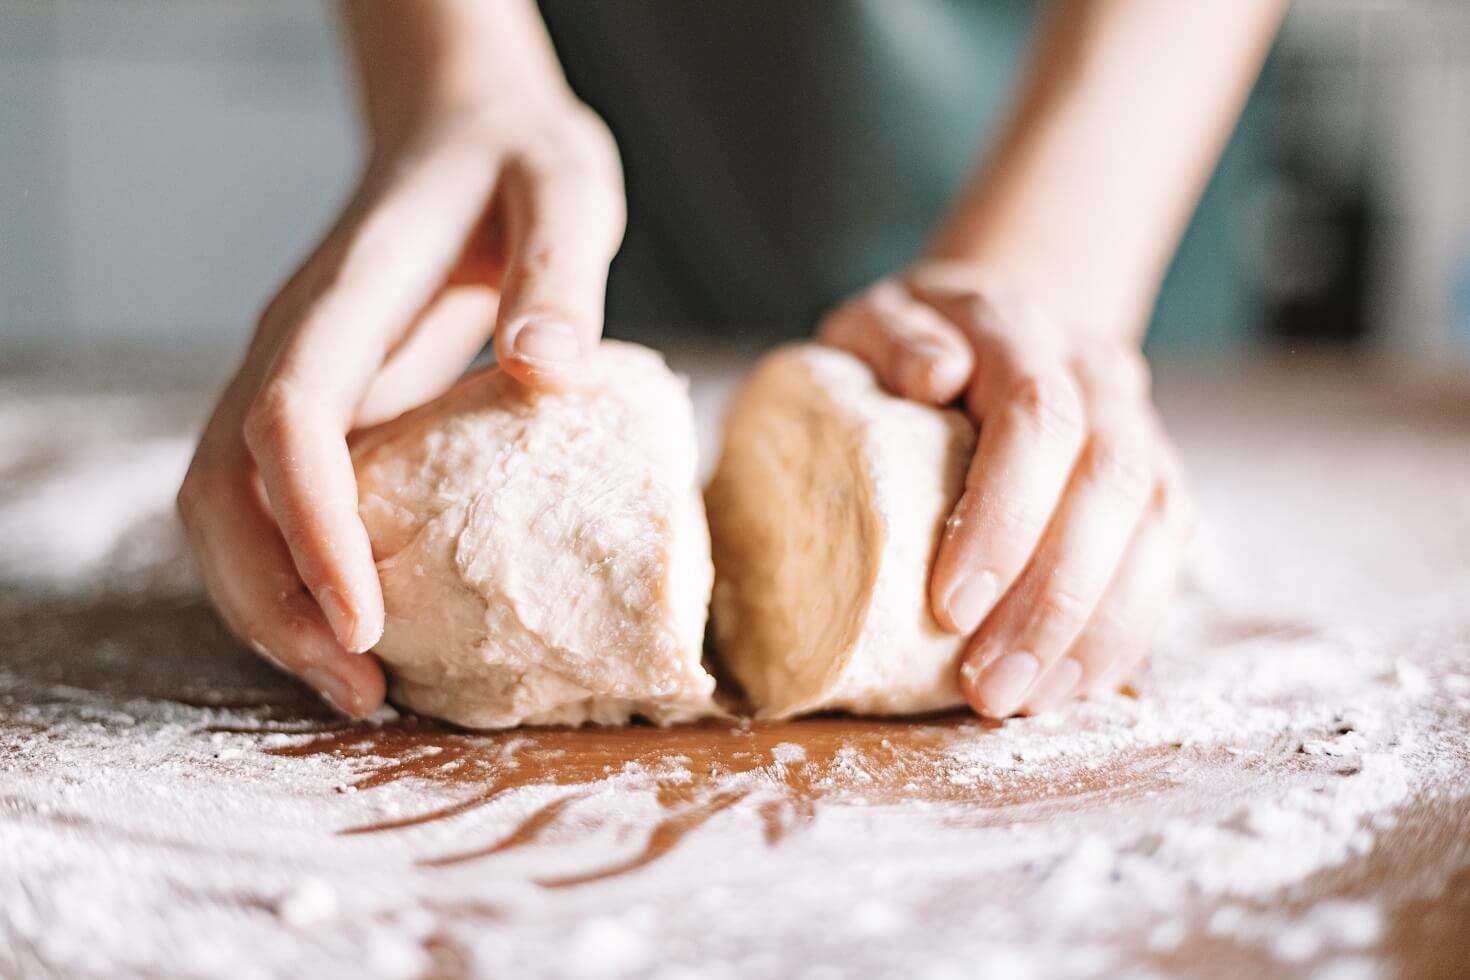 Hands rolling dough with gluten